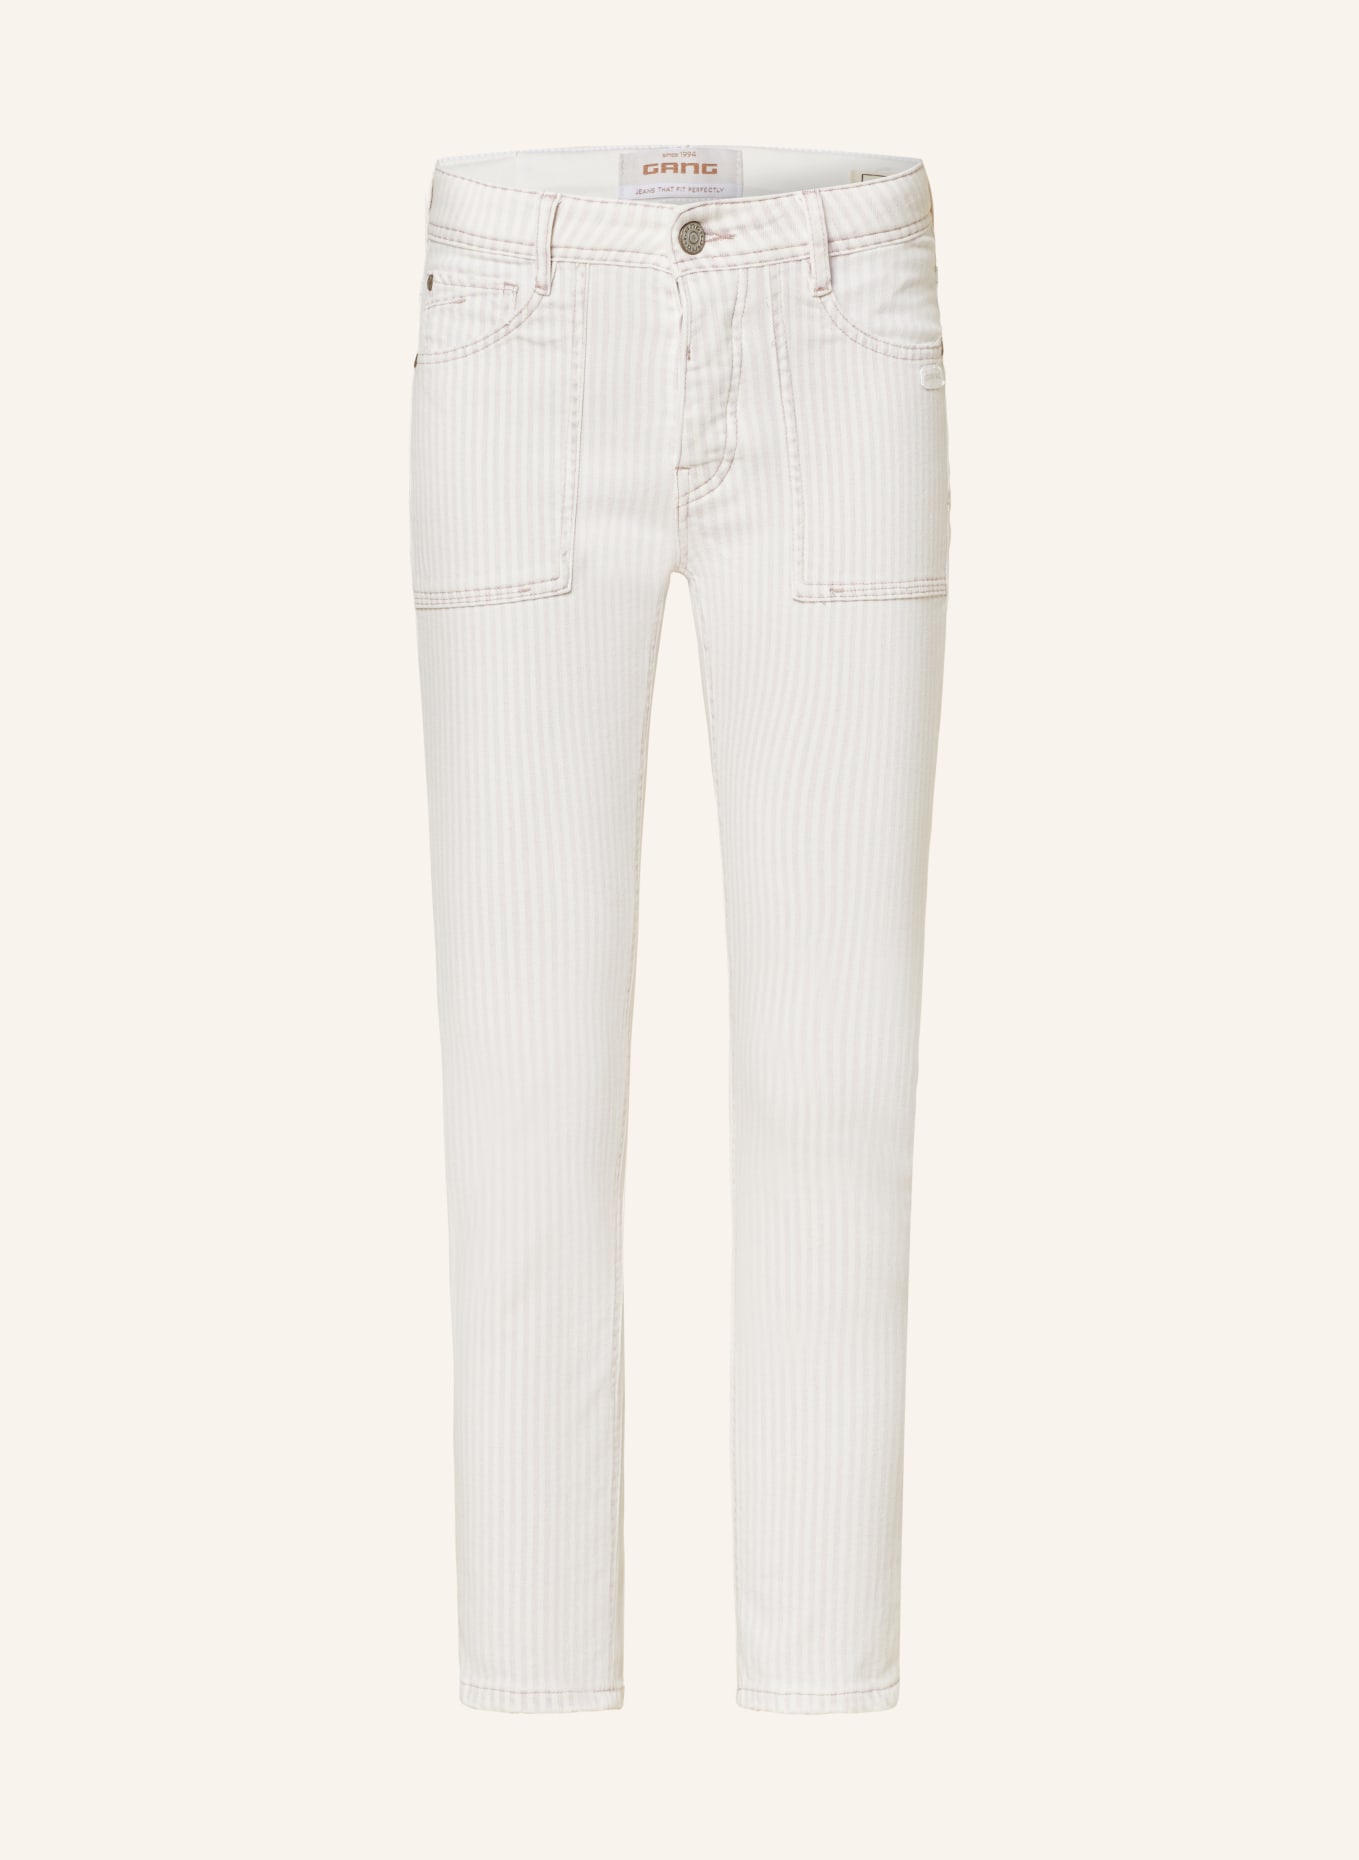 GANG 7/8-Jeans NICA, Farbe: 3401 lilac stripes (Bild 1)